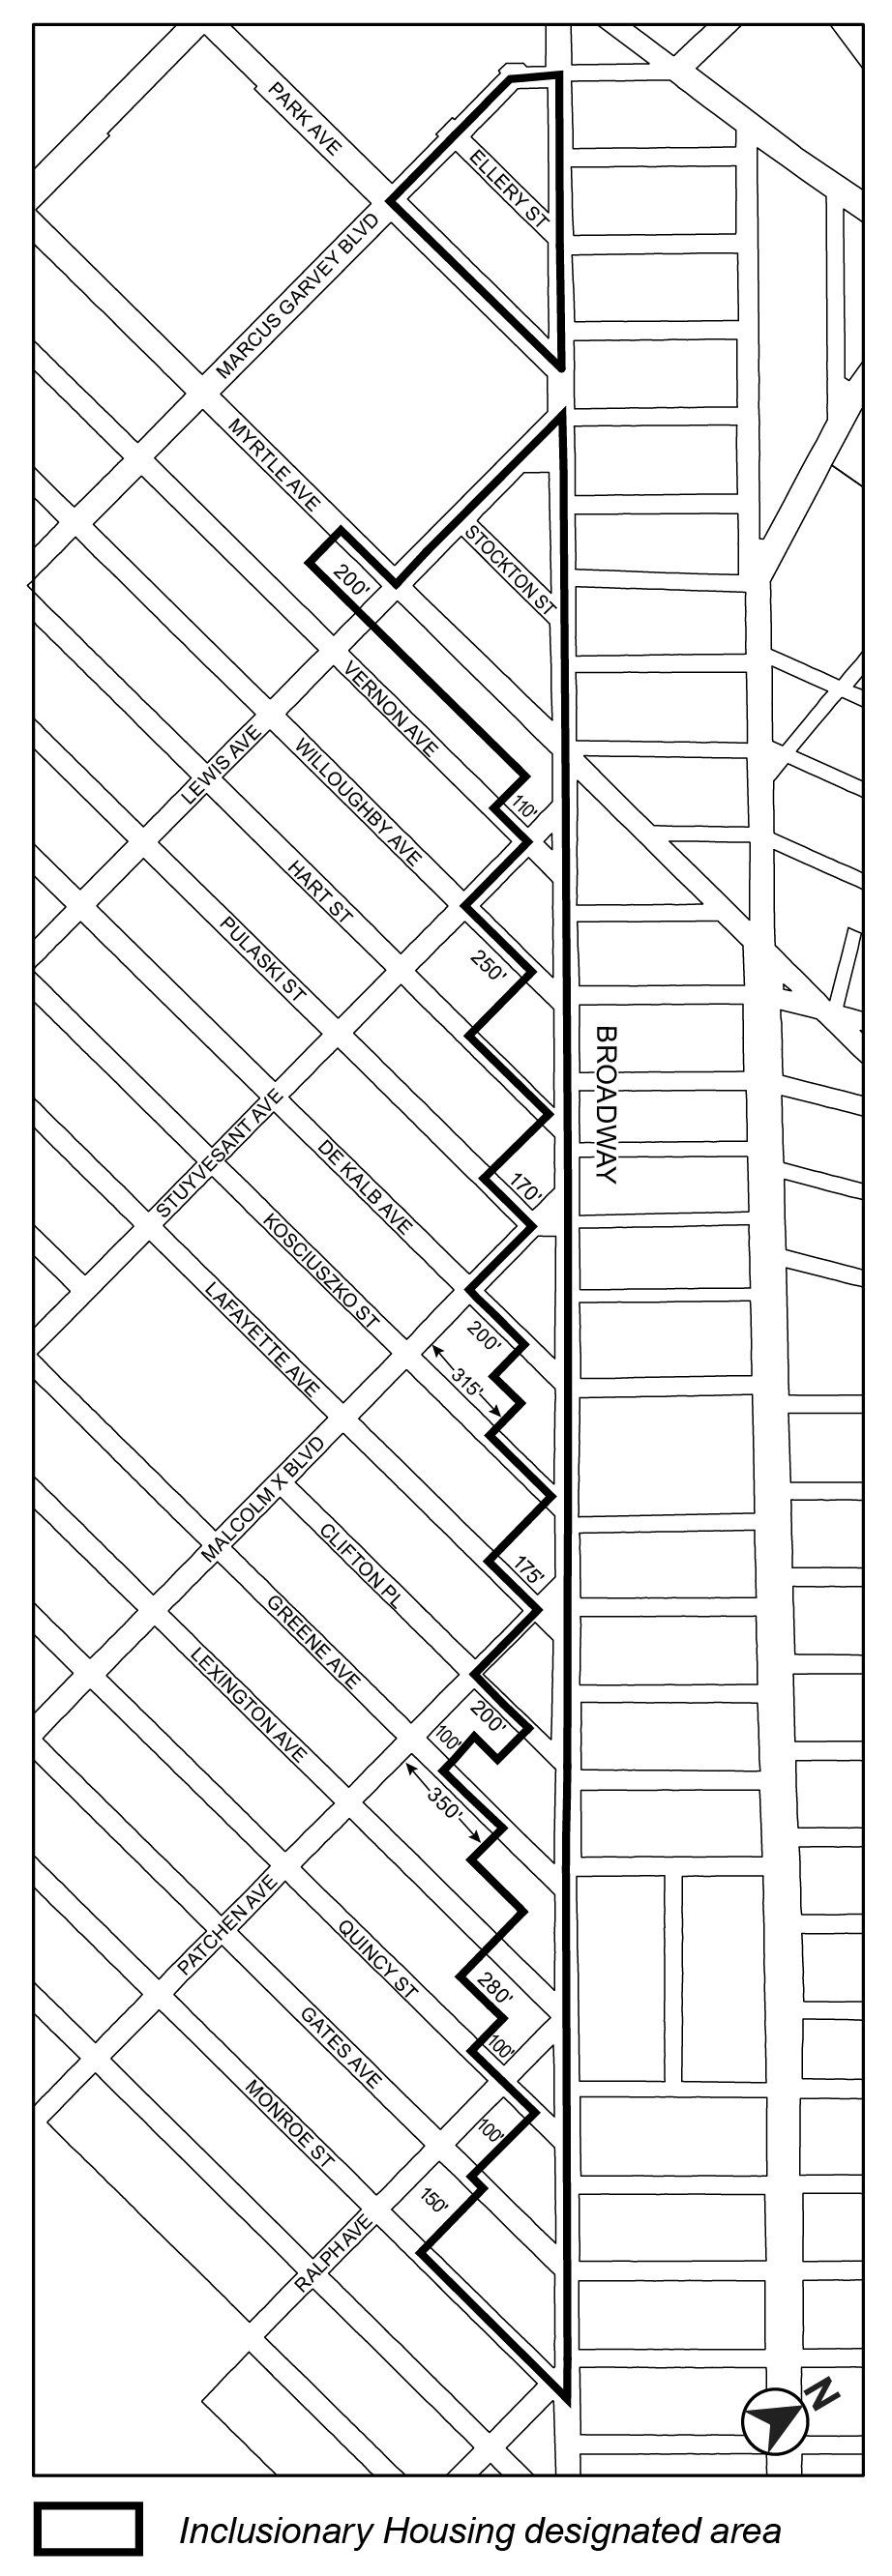 APPENDIX F, Brooklyn CD 3, Map 5, IHda, effective date 11th October, 2012